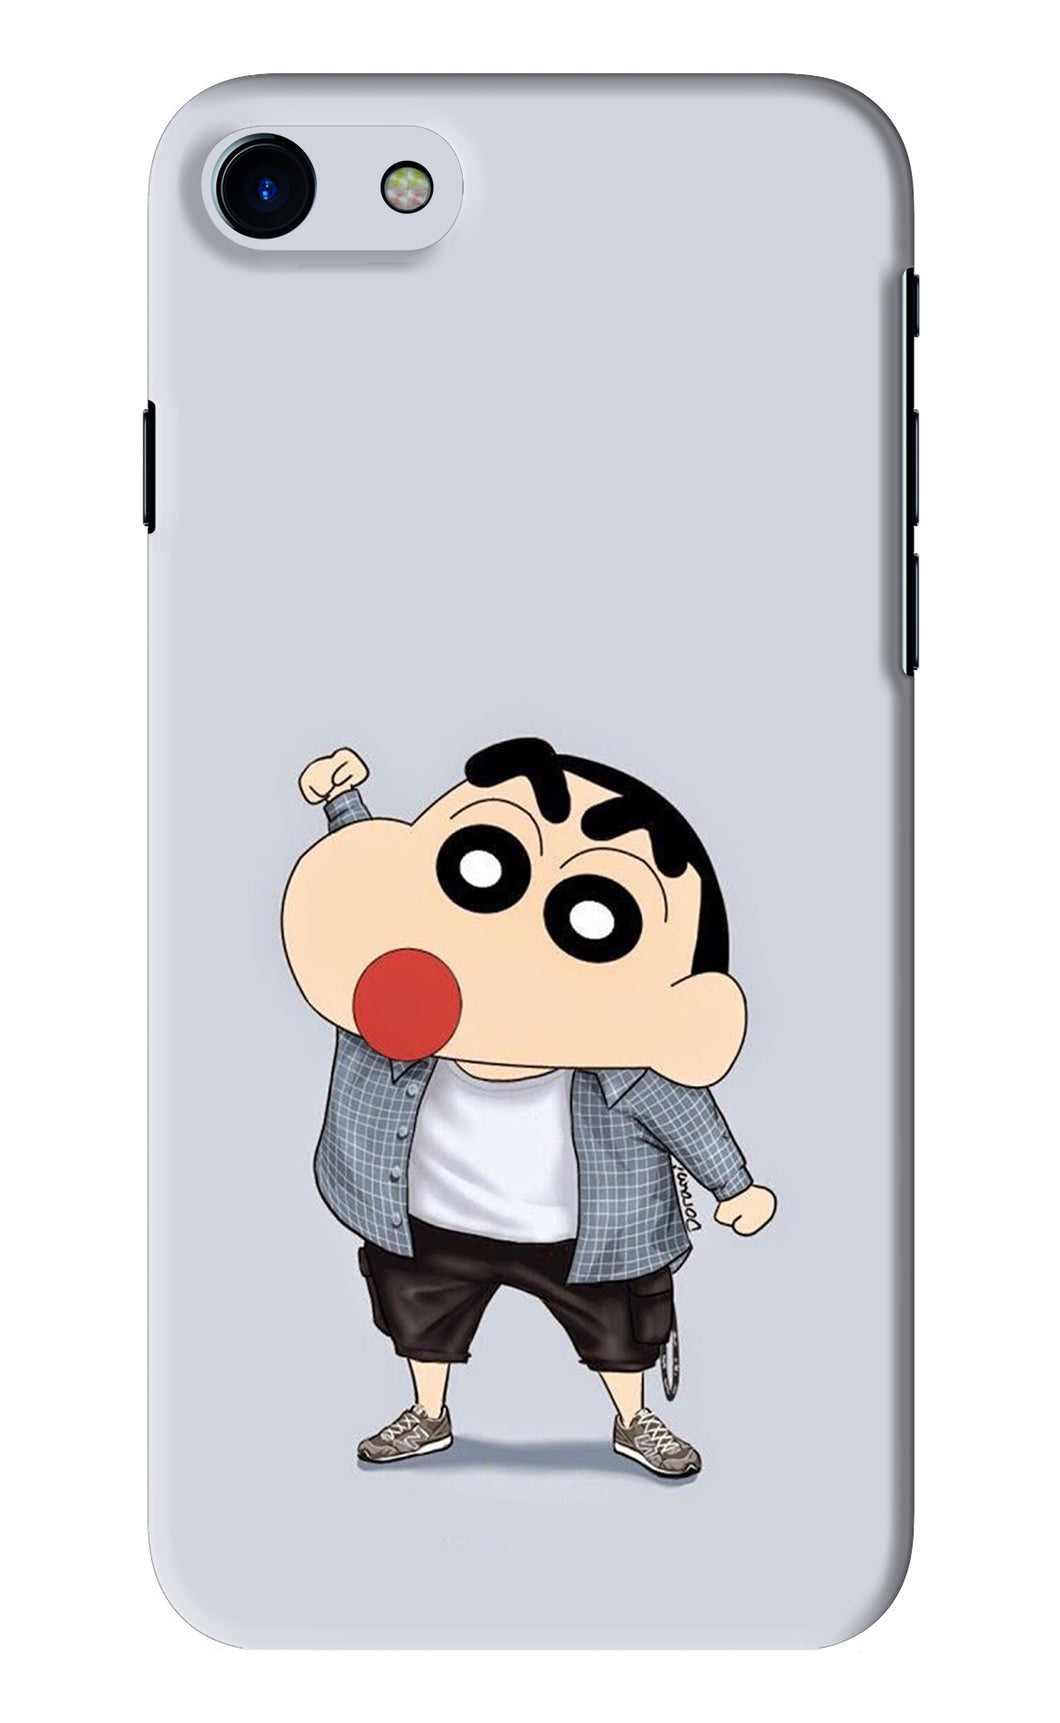 Shinchan iPhone 7 Back Skin Wrap